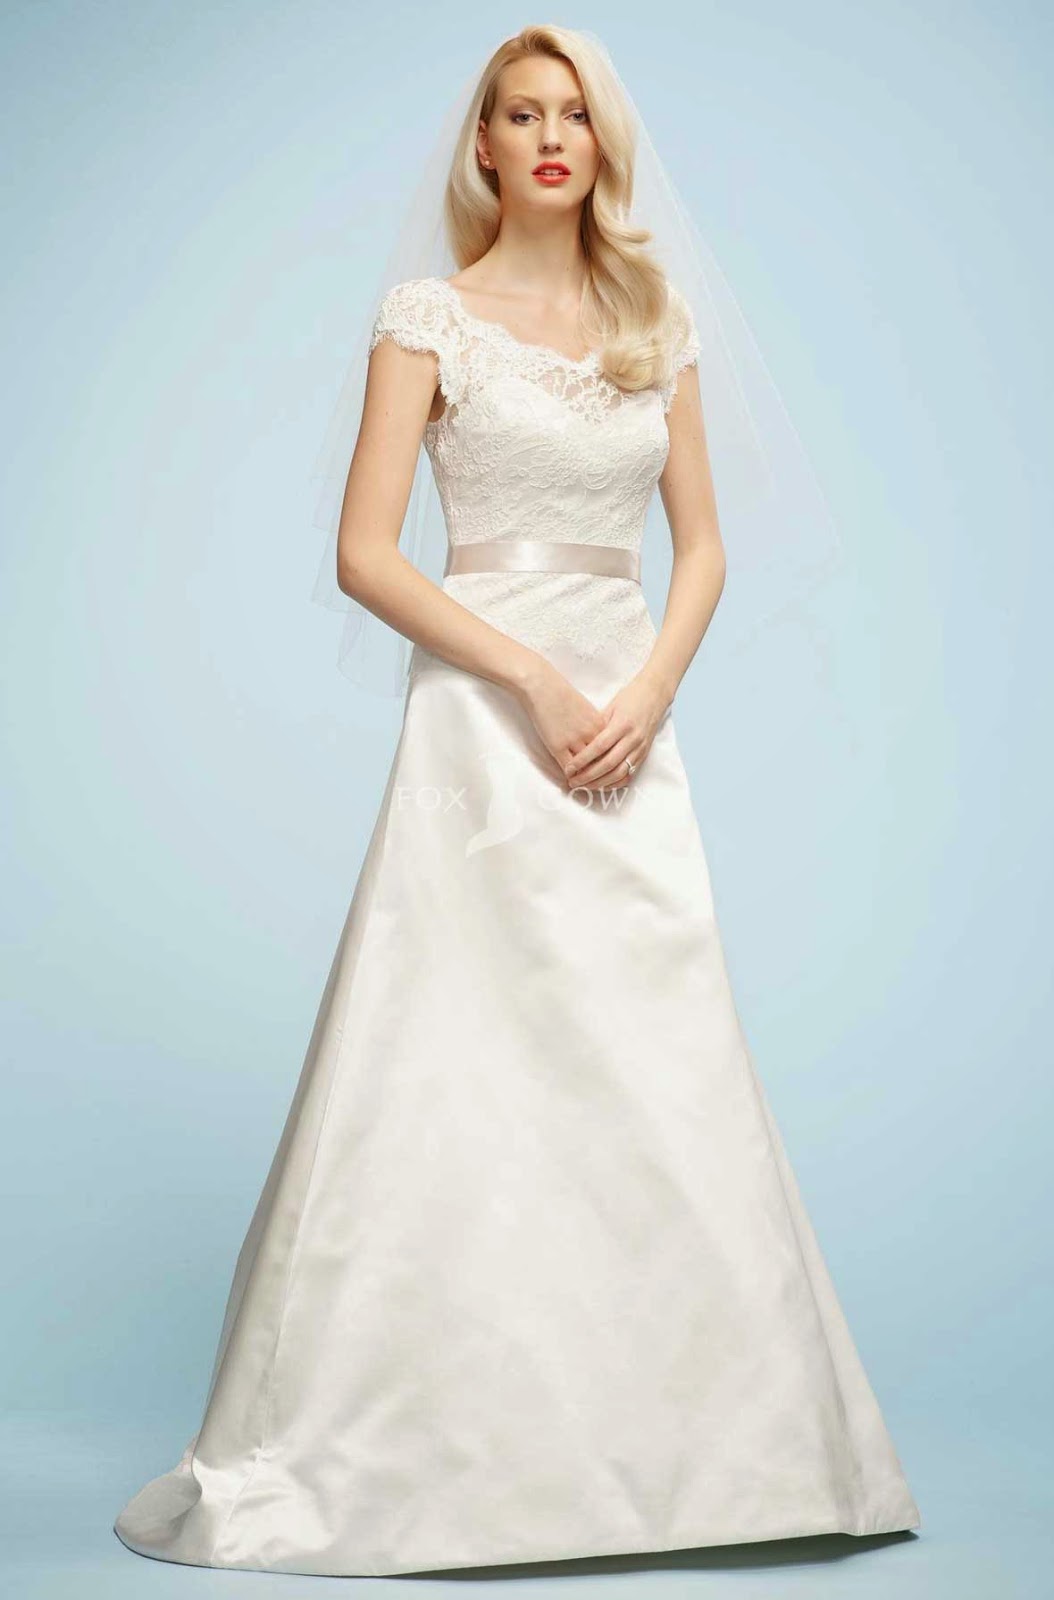 Lace Wedding Dresses Cap Sleeves Ideas